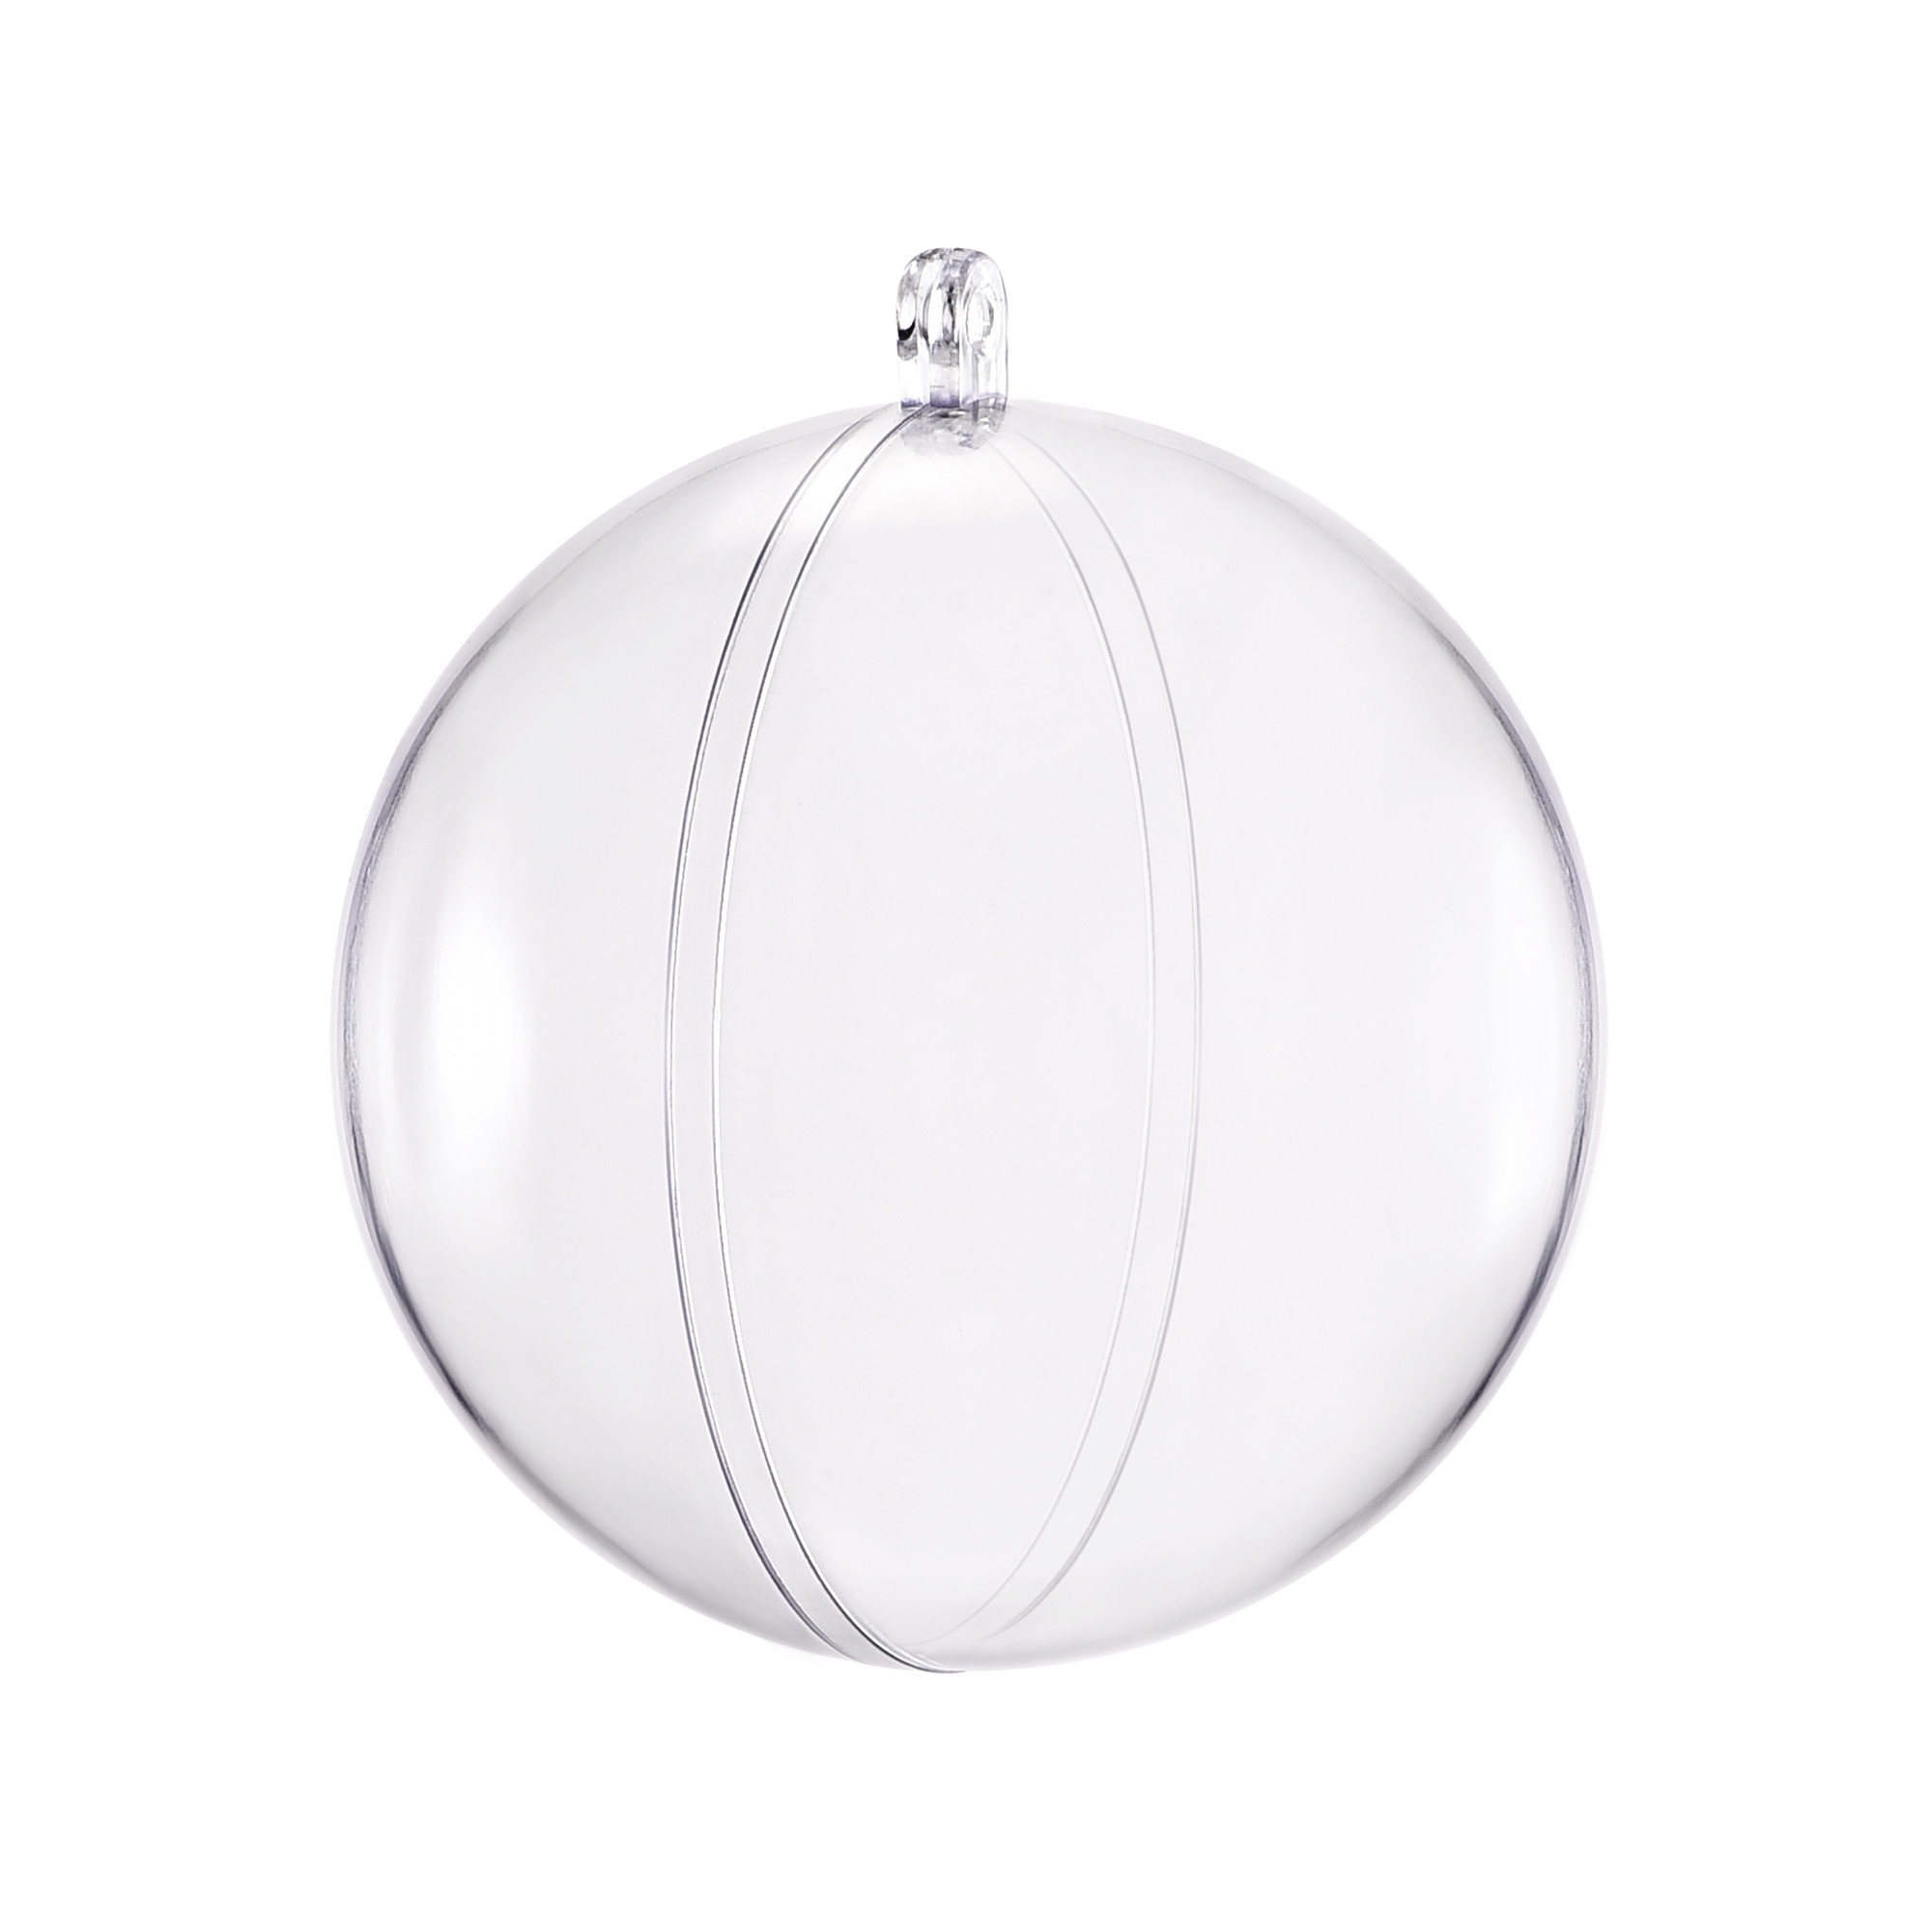 5pcs 90mm Clear Plastic Ornaments Ball